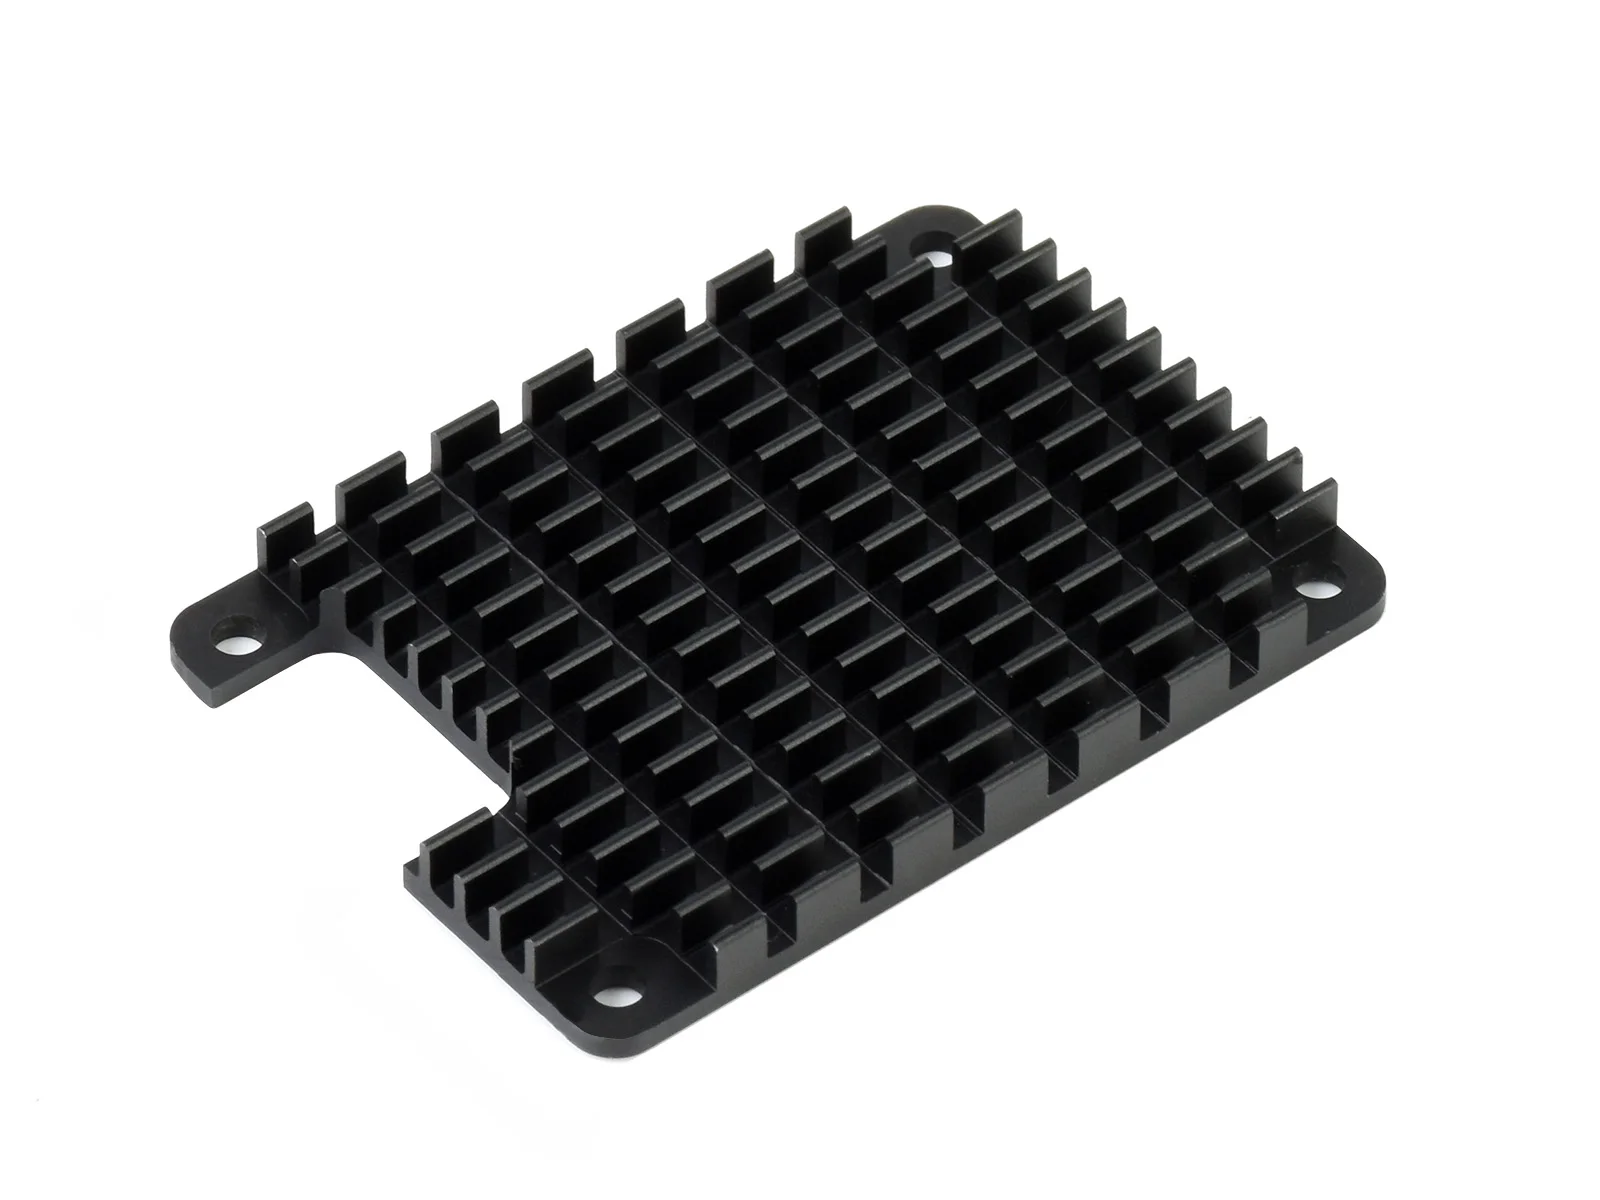 Waveshare Dedicated Aluminum Heatsink For Raspberry Pi Compute Module 4 CM4, Notched For Antenna